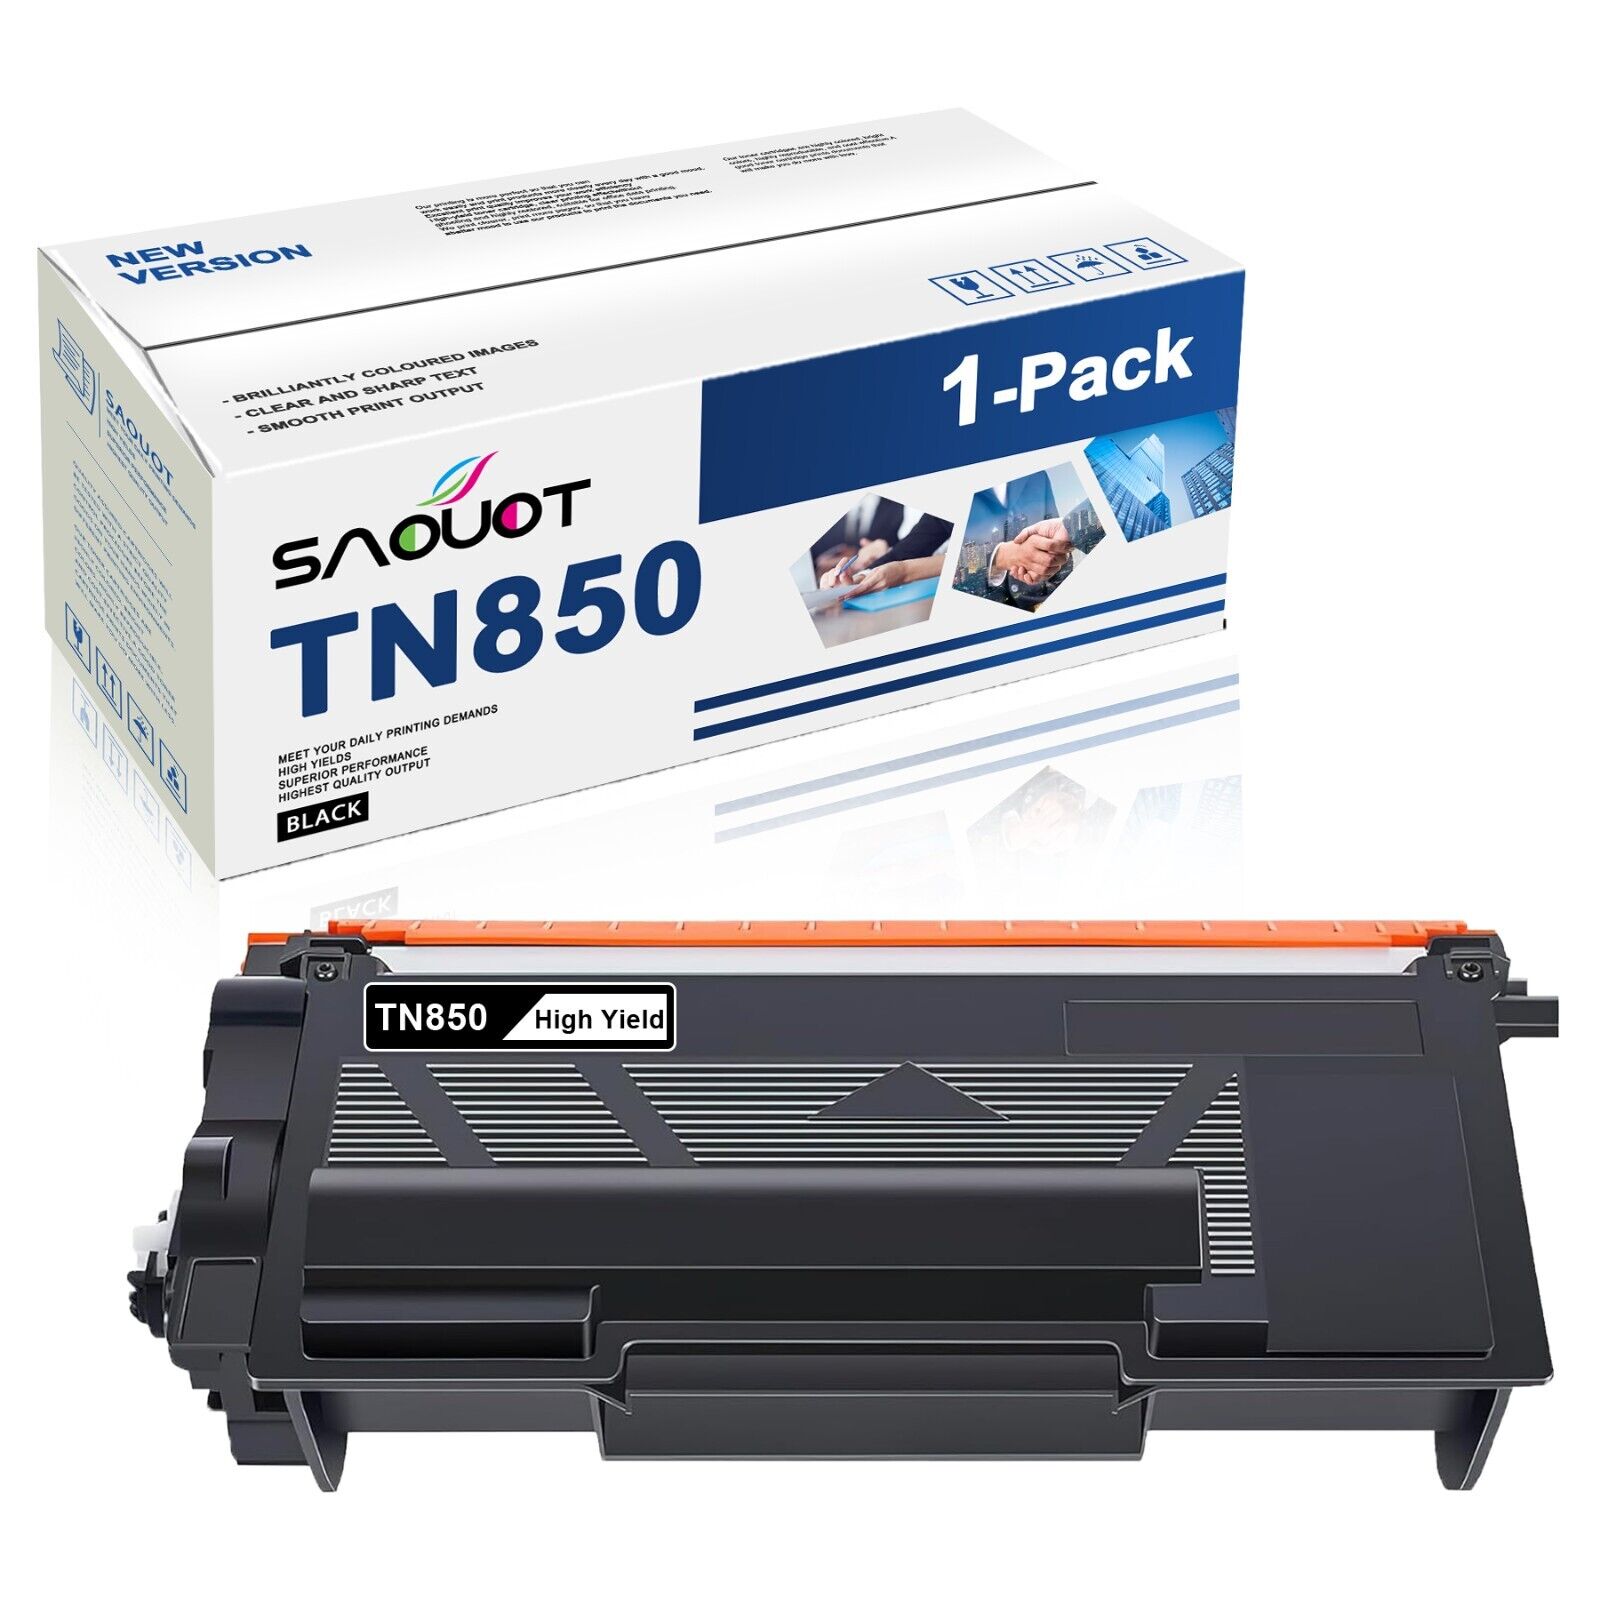 TN850 TN 850 Toner Cartridge Replacement for Brother tn 850 HL-L5000D L5100DN